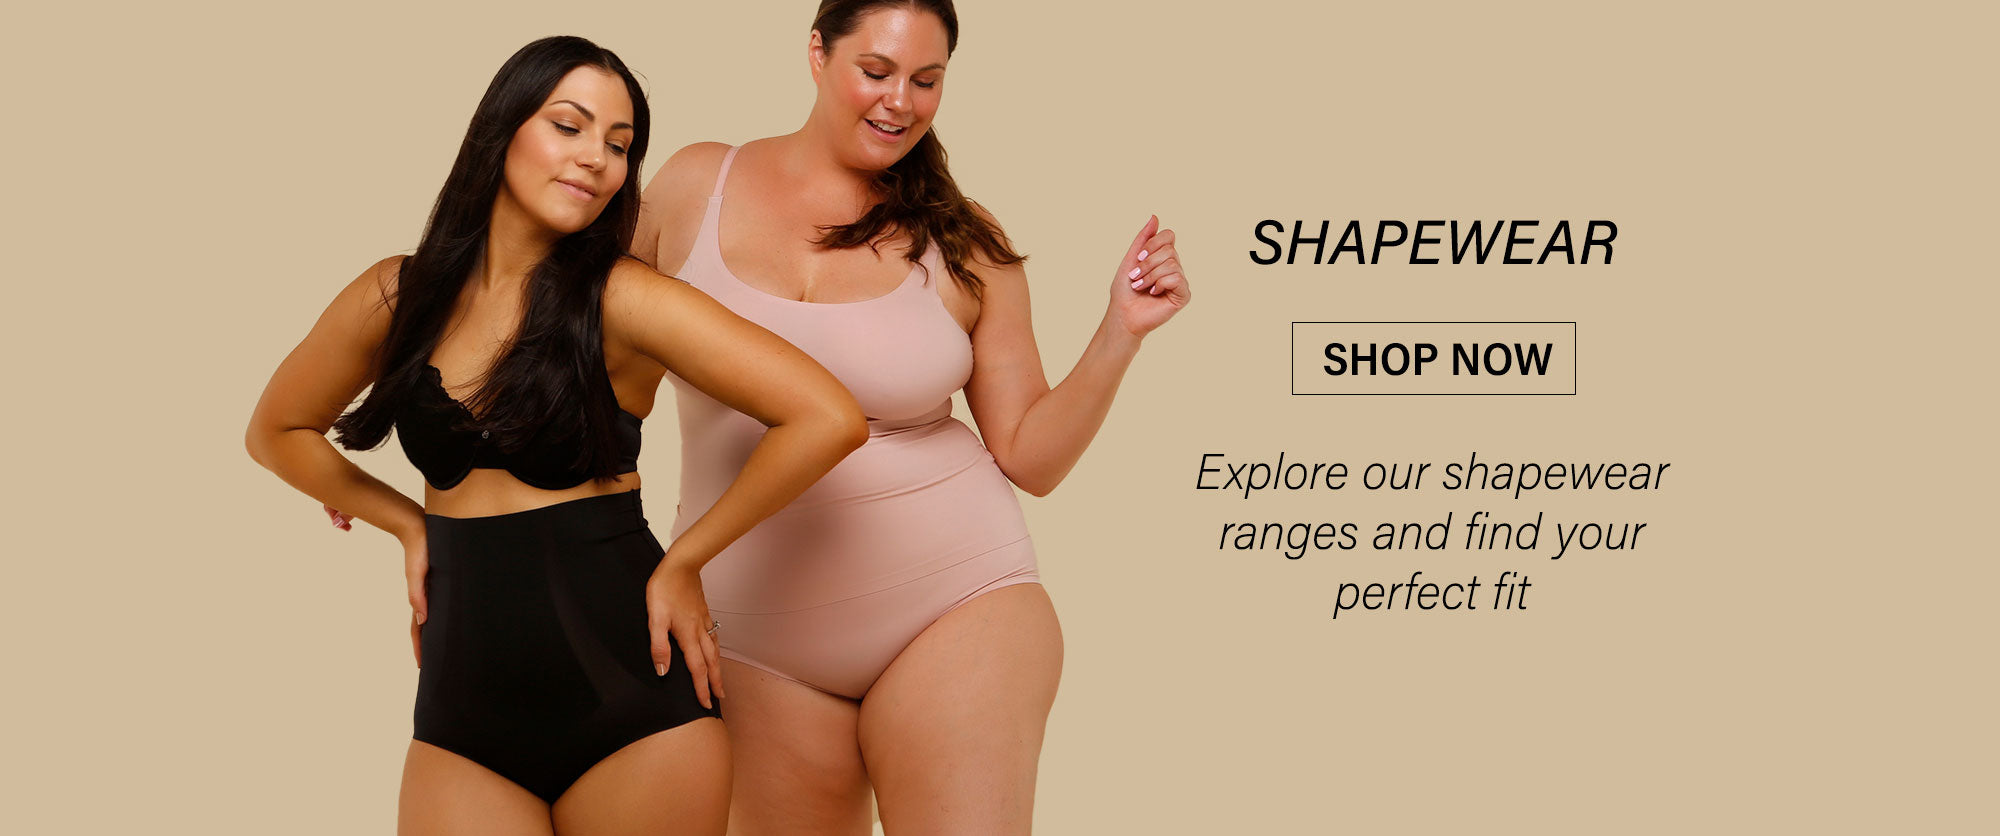 Body Hush Shapewear – Tagged Tummy Control– Style Boutique